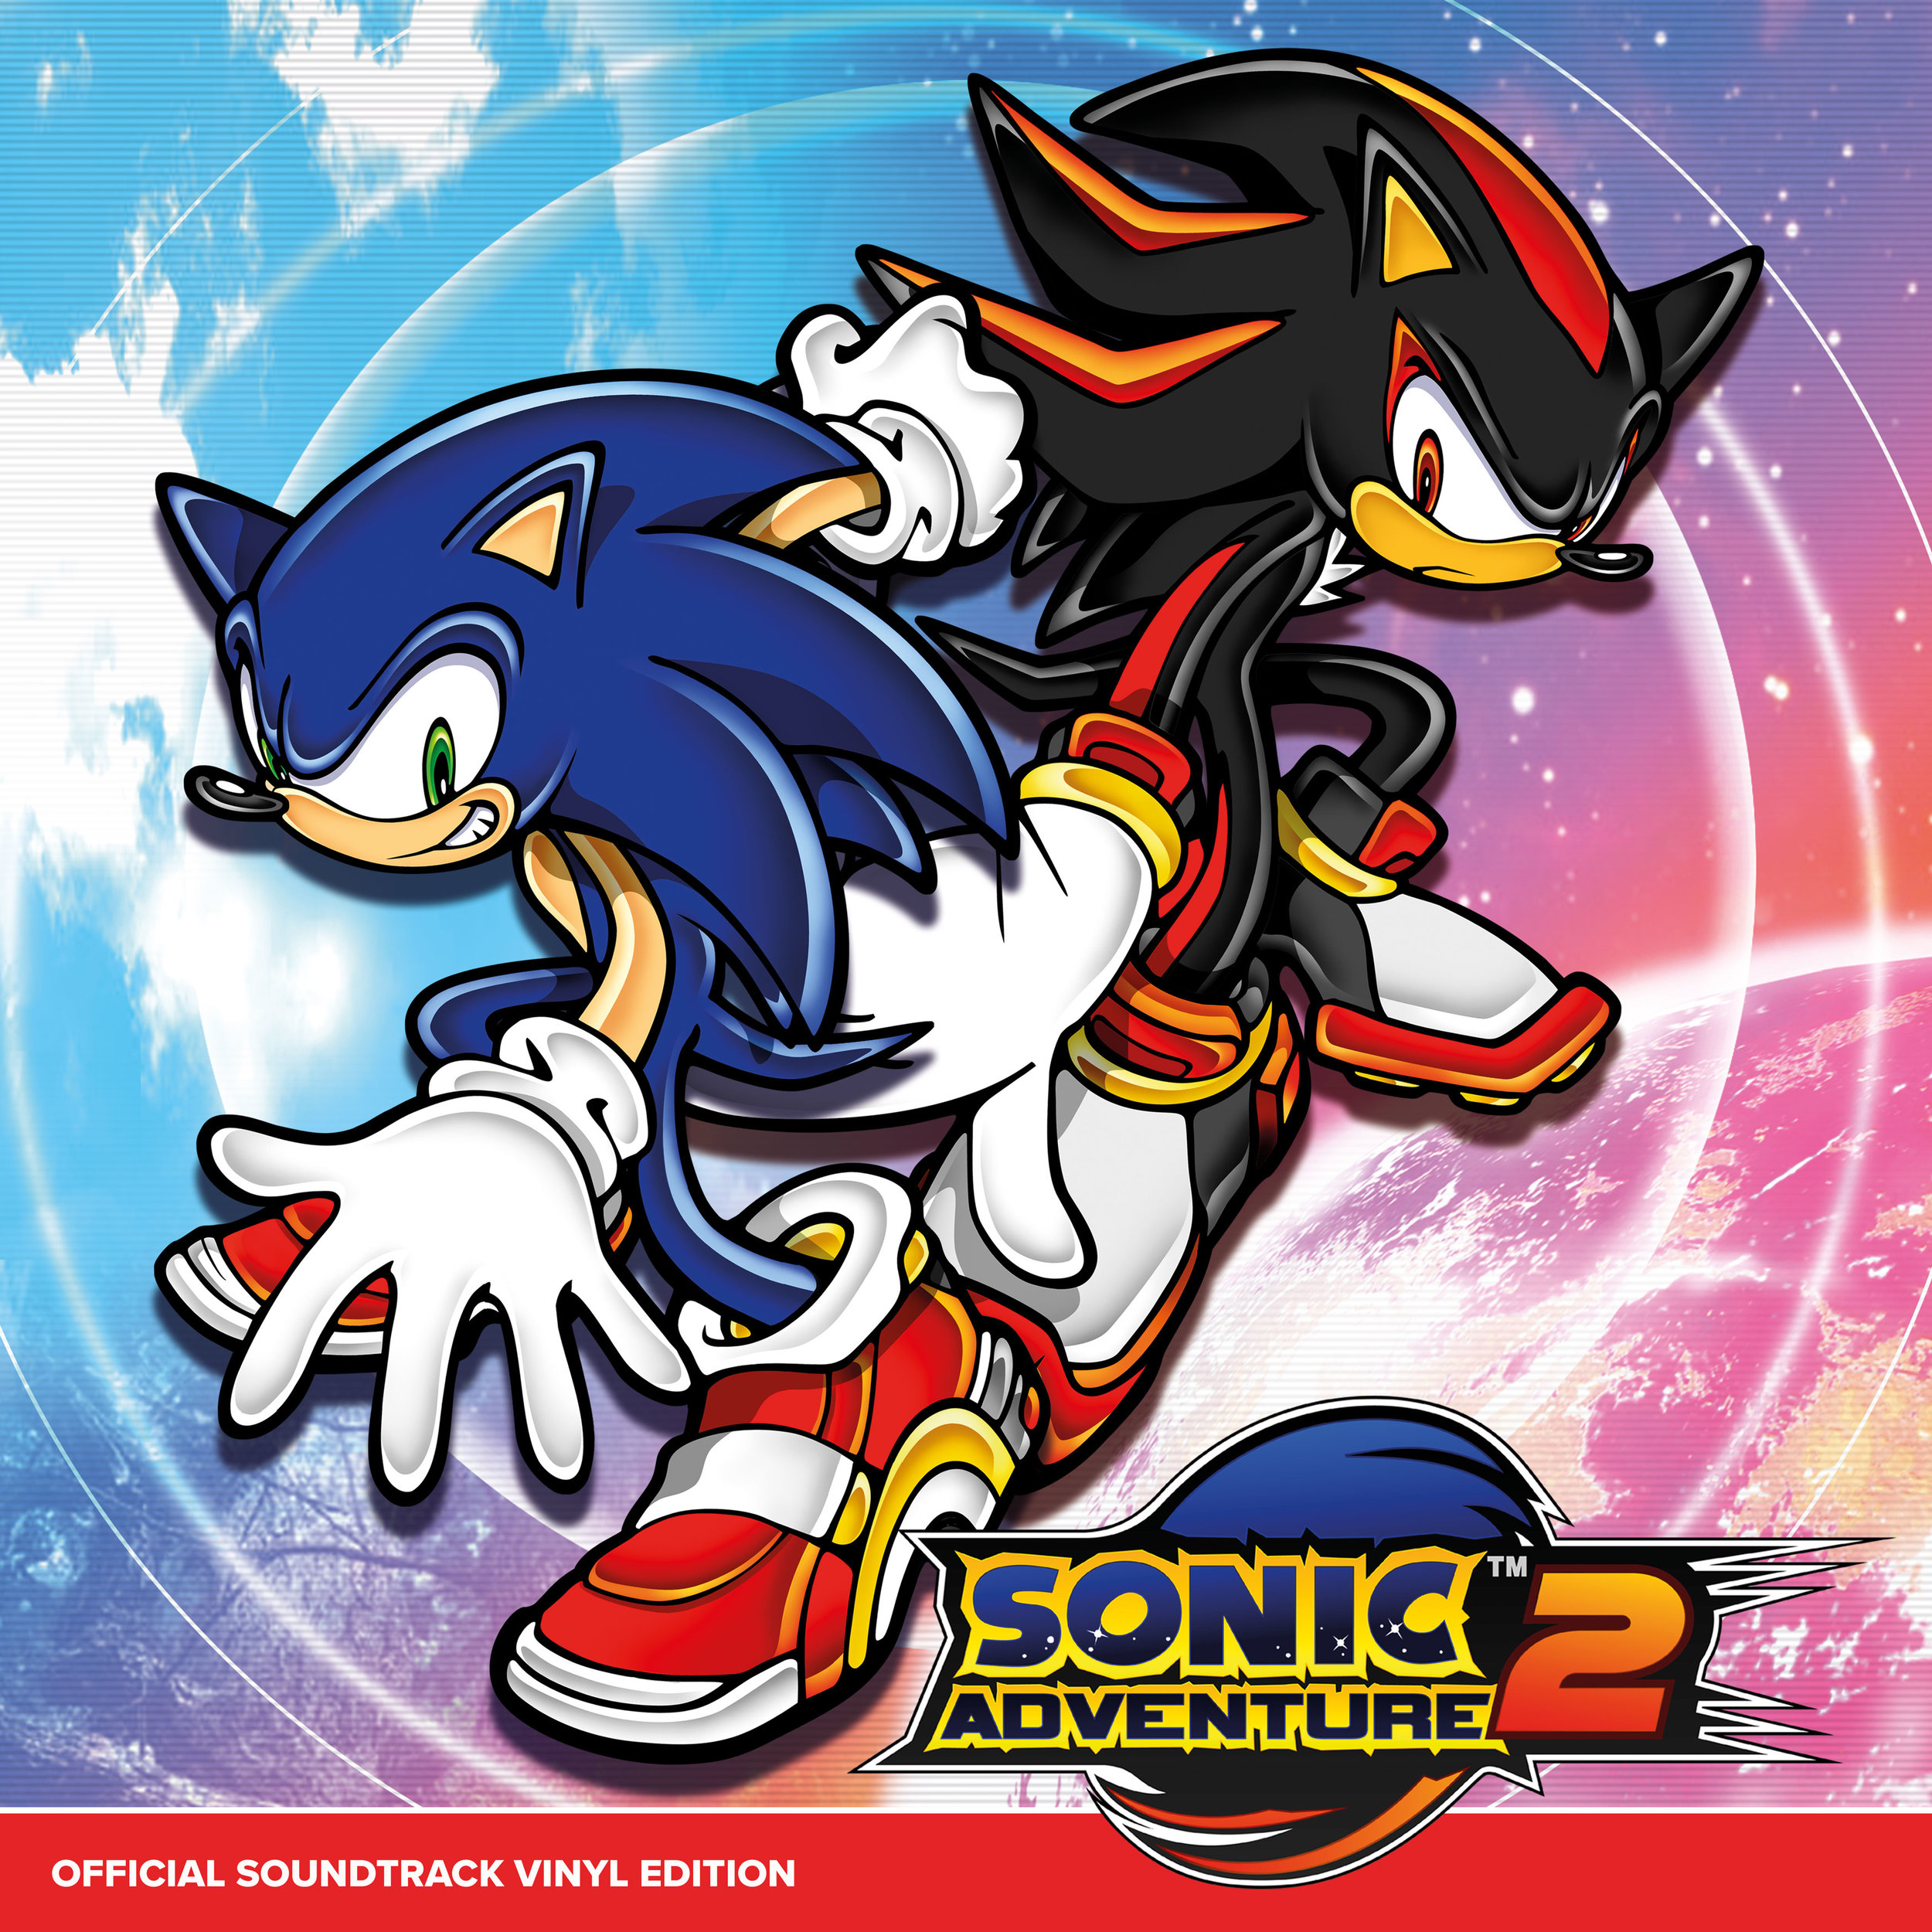 Comprar Sonic Adventure